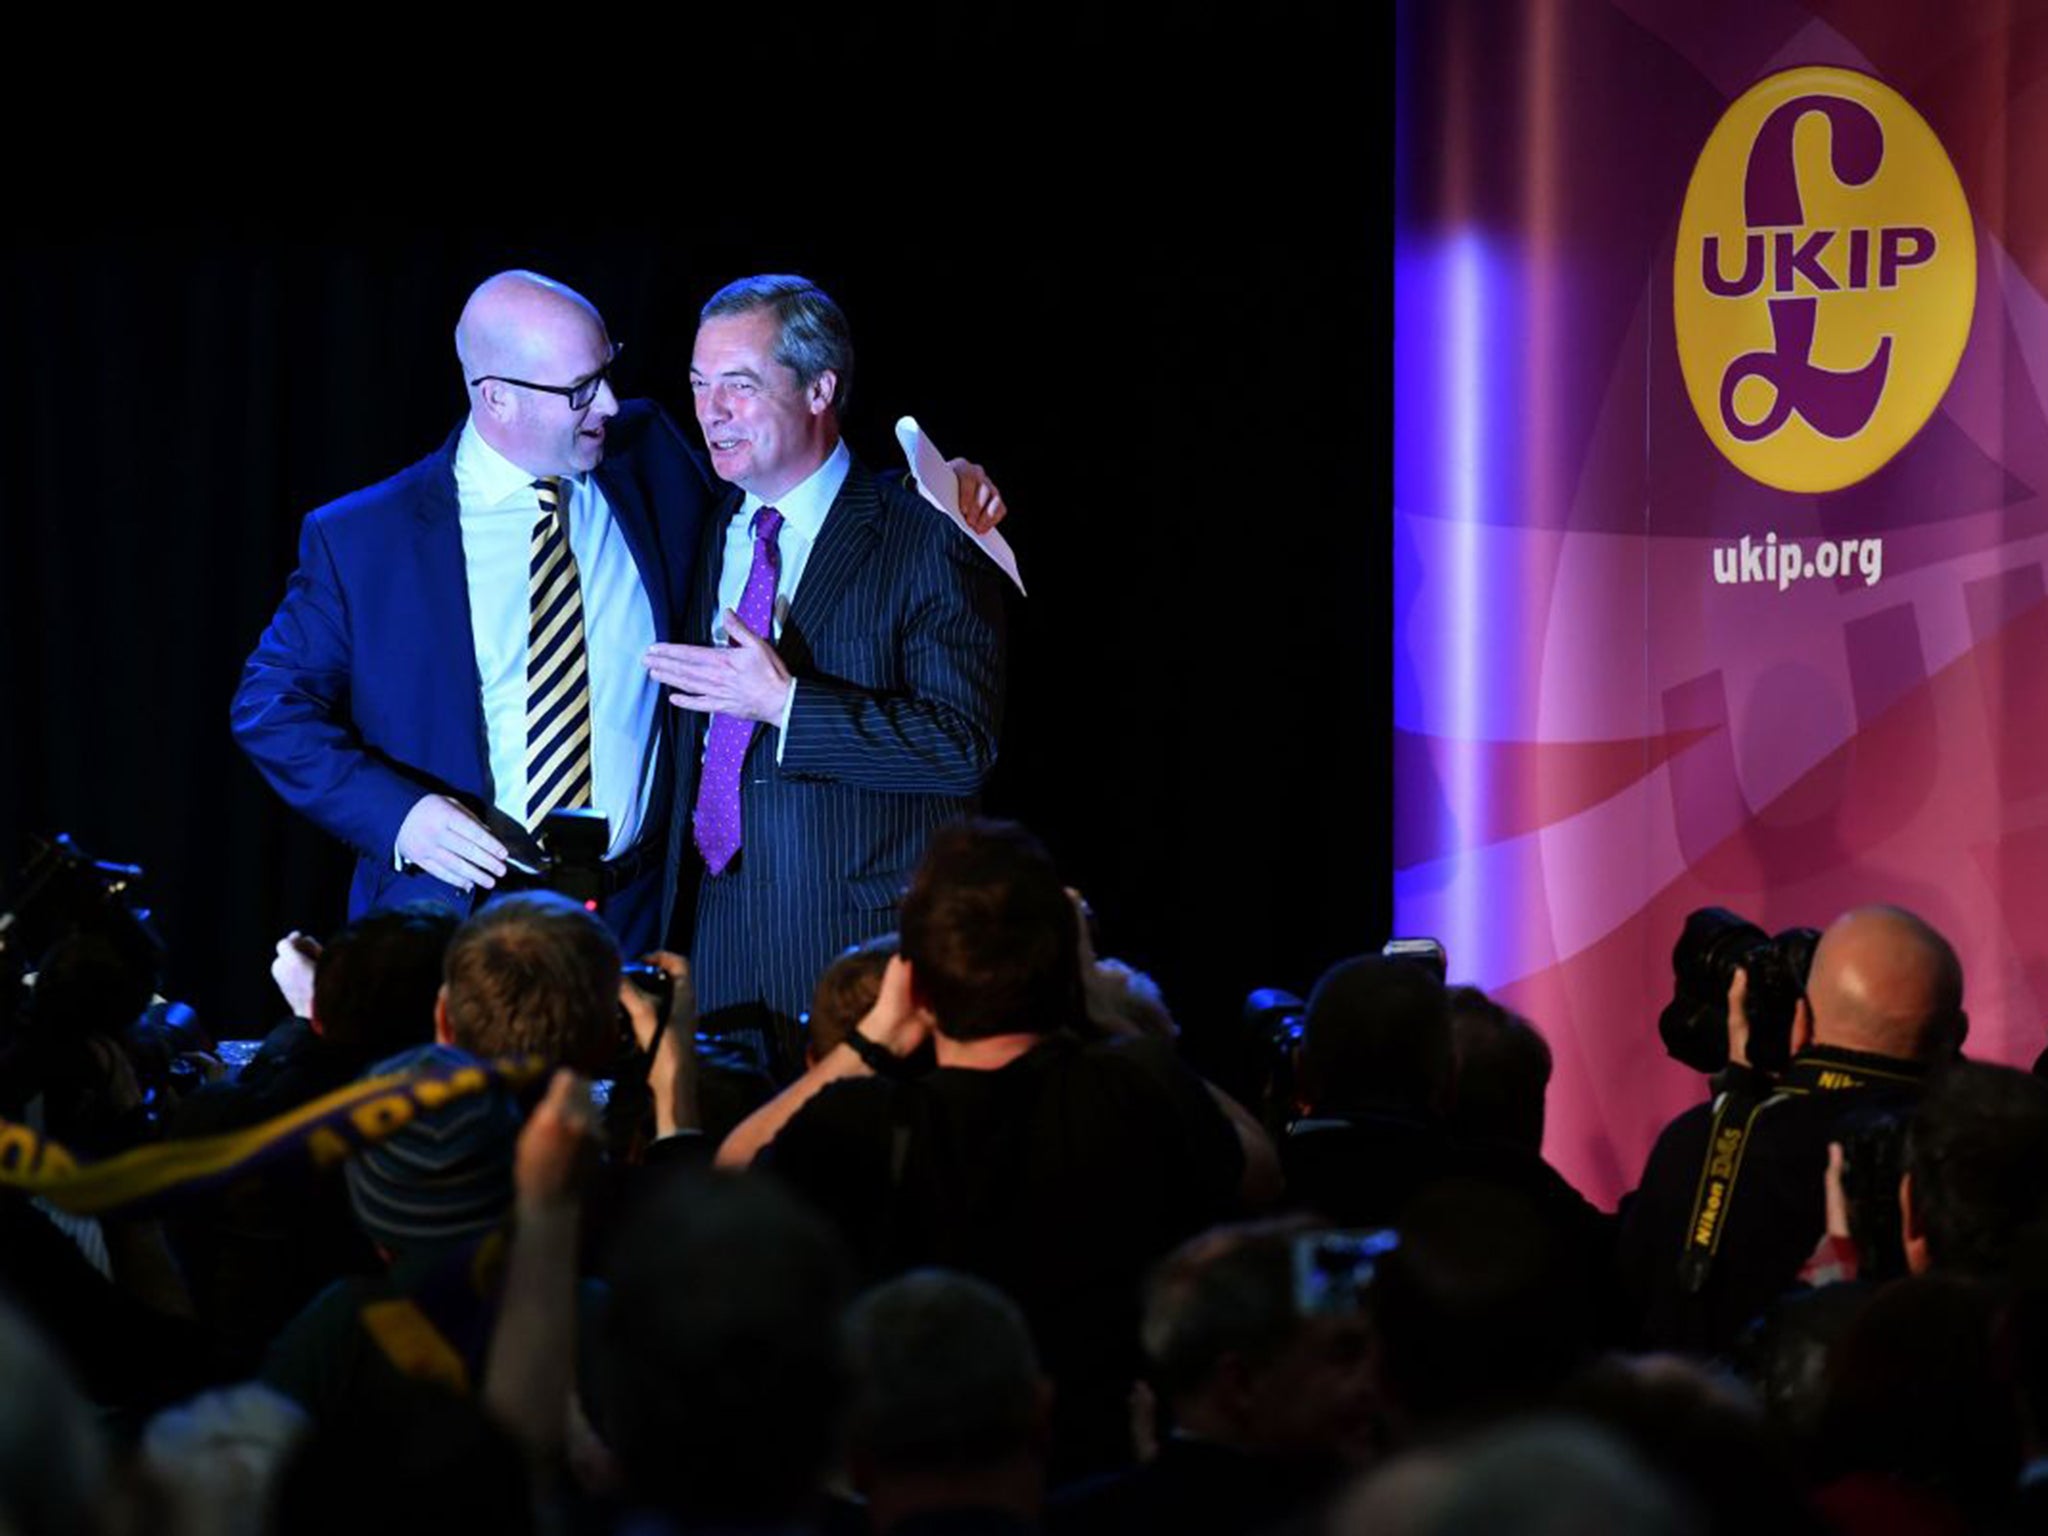 Paul Nuttall has replaced Nigel Farage as leader of UKIP